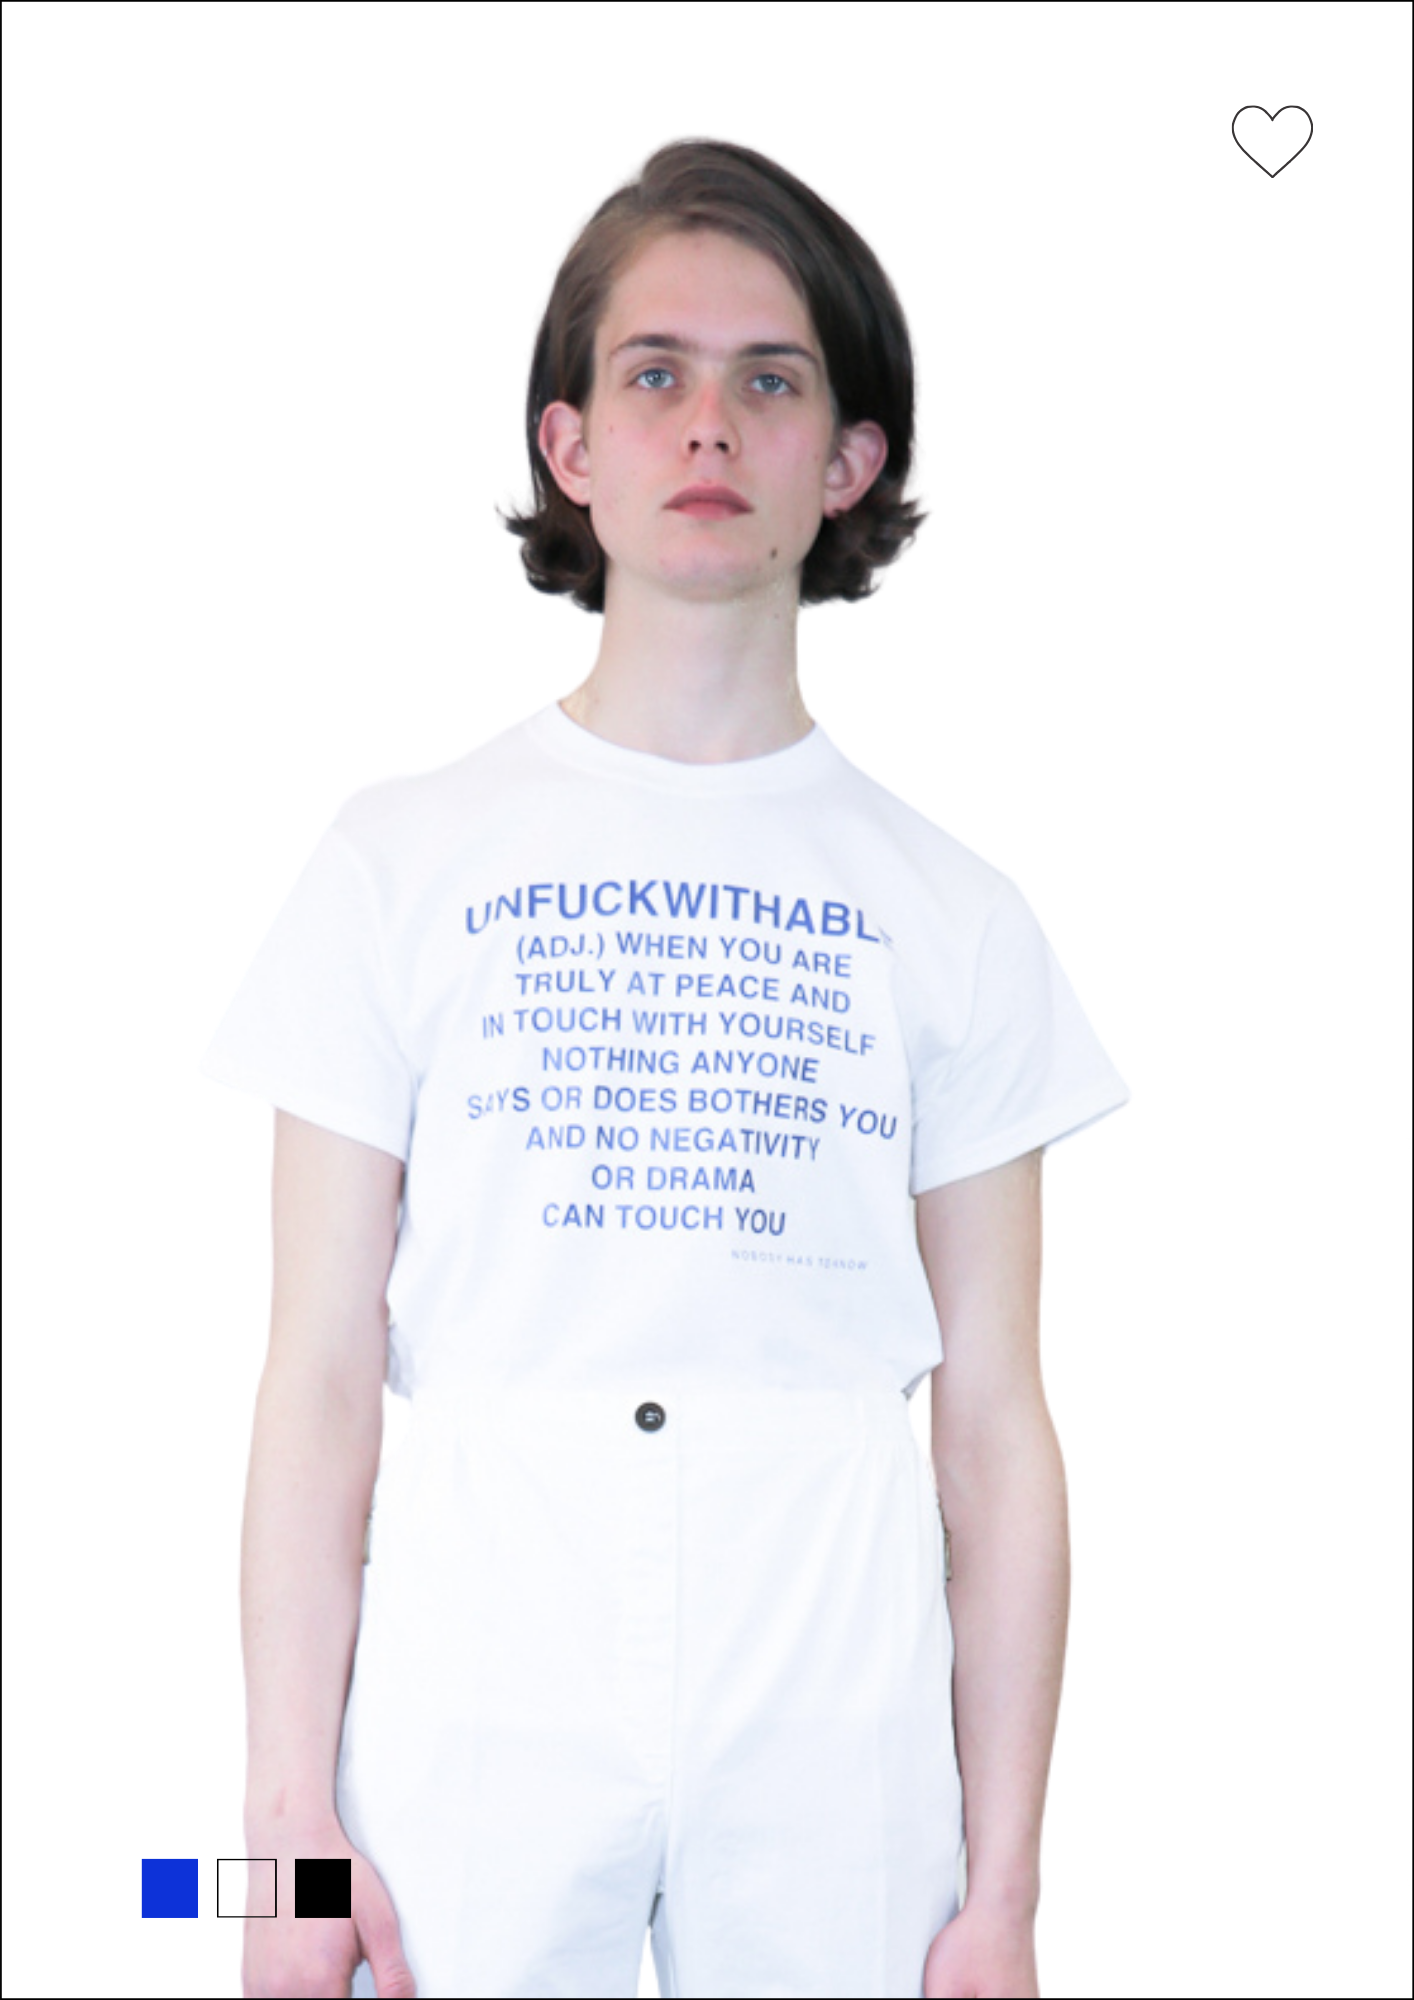 Unfuckwithable (E) - t-shirt white